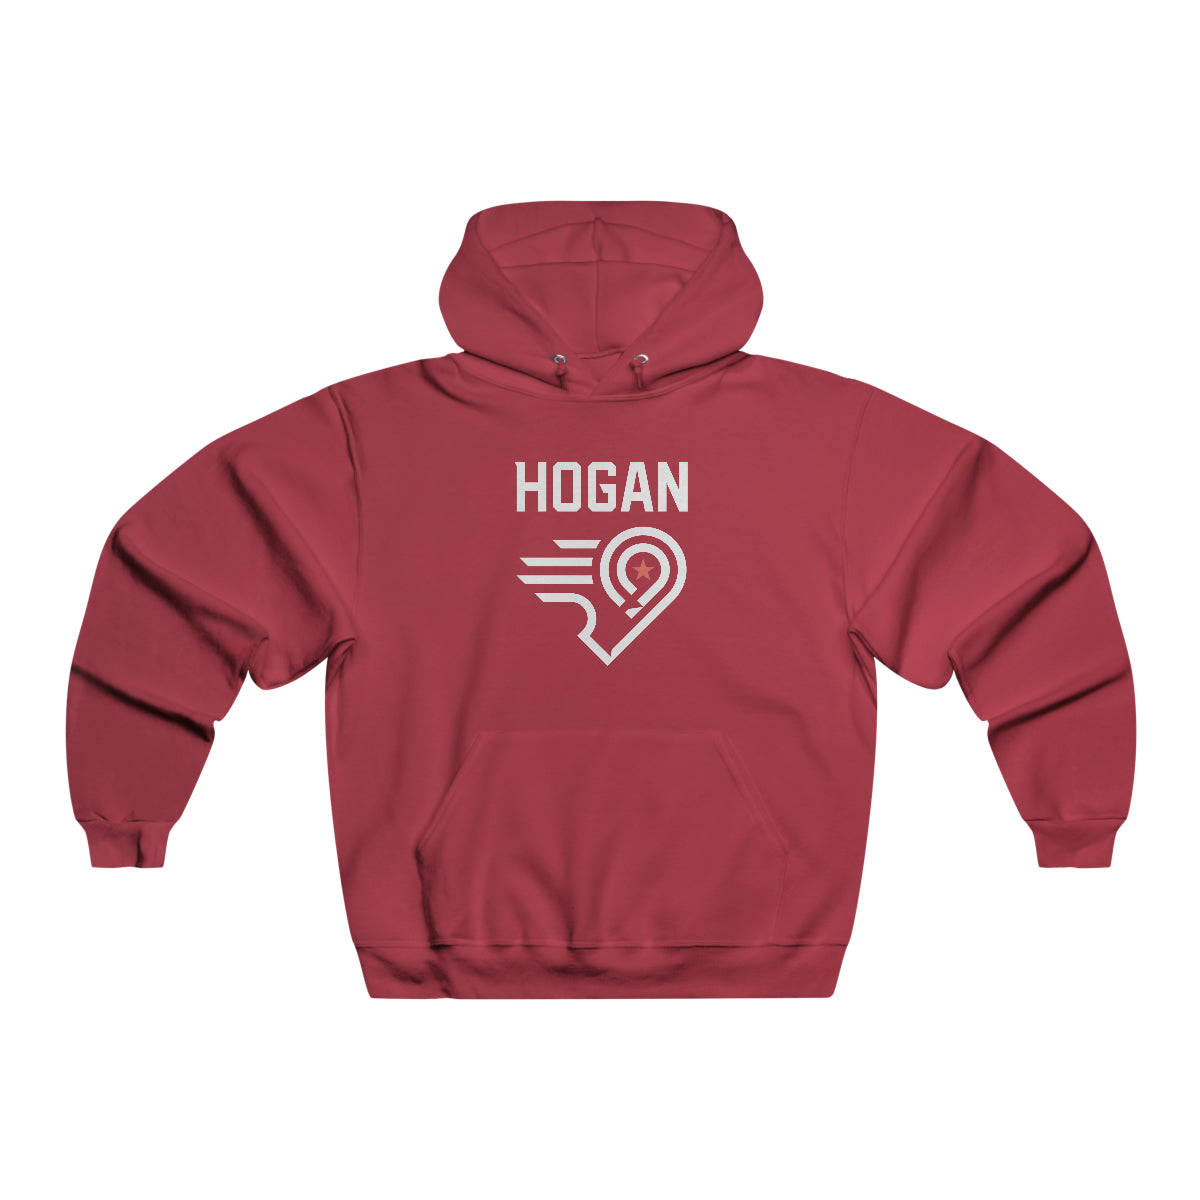 Hogan Adult Hooded Sweatshirt